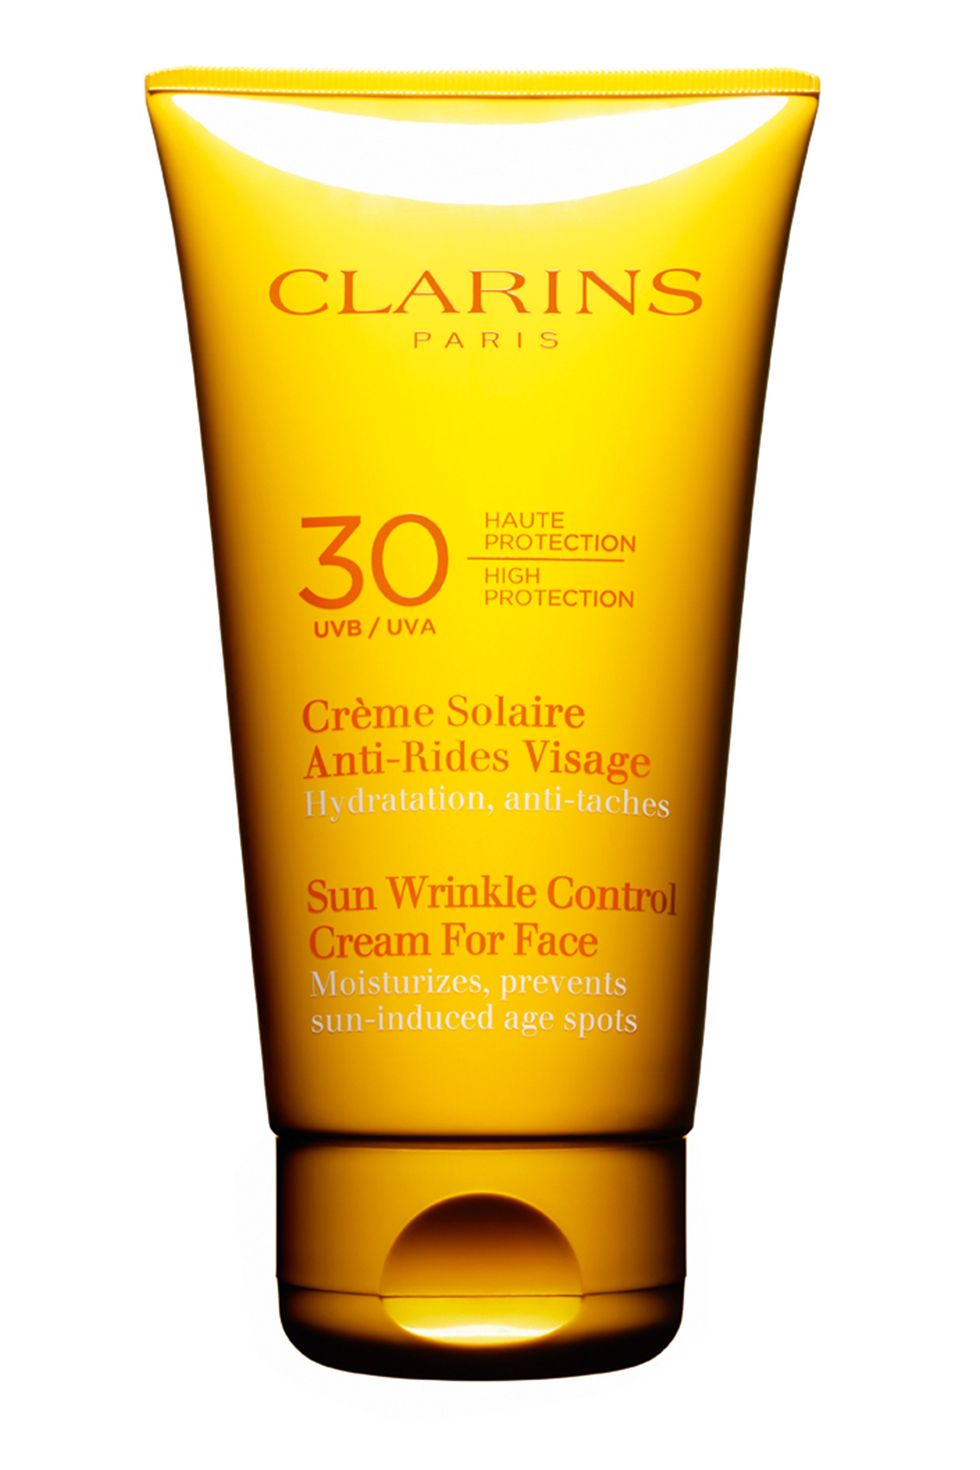 Clarins sunscreen